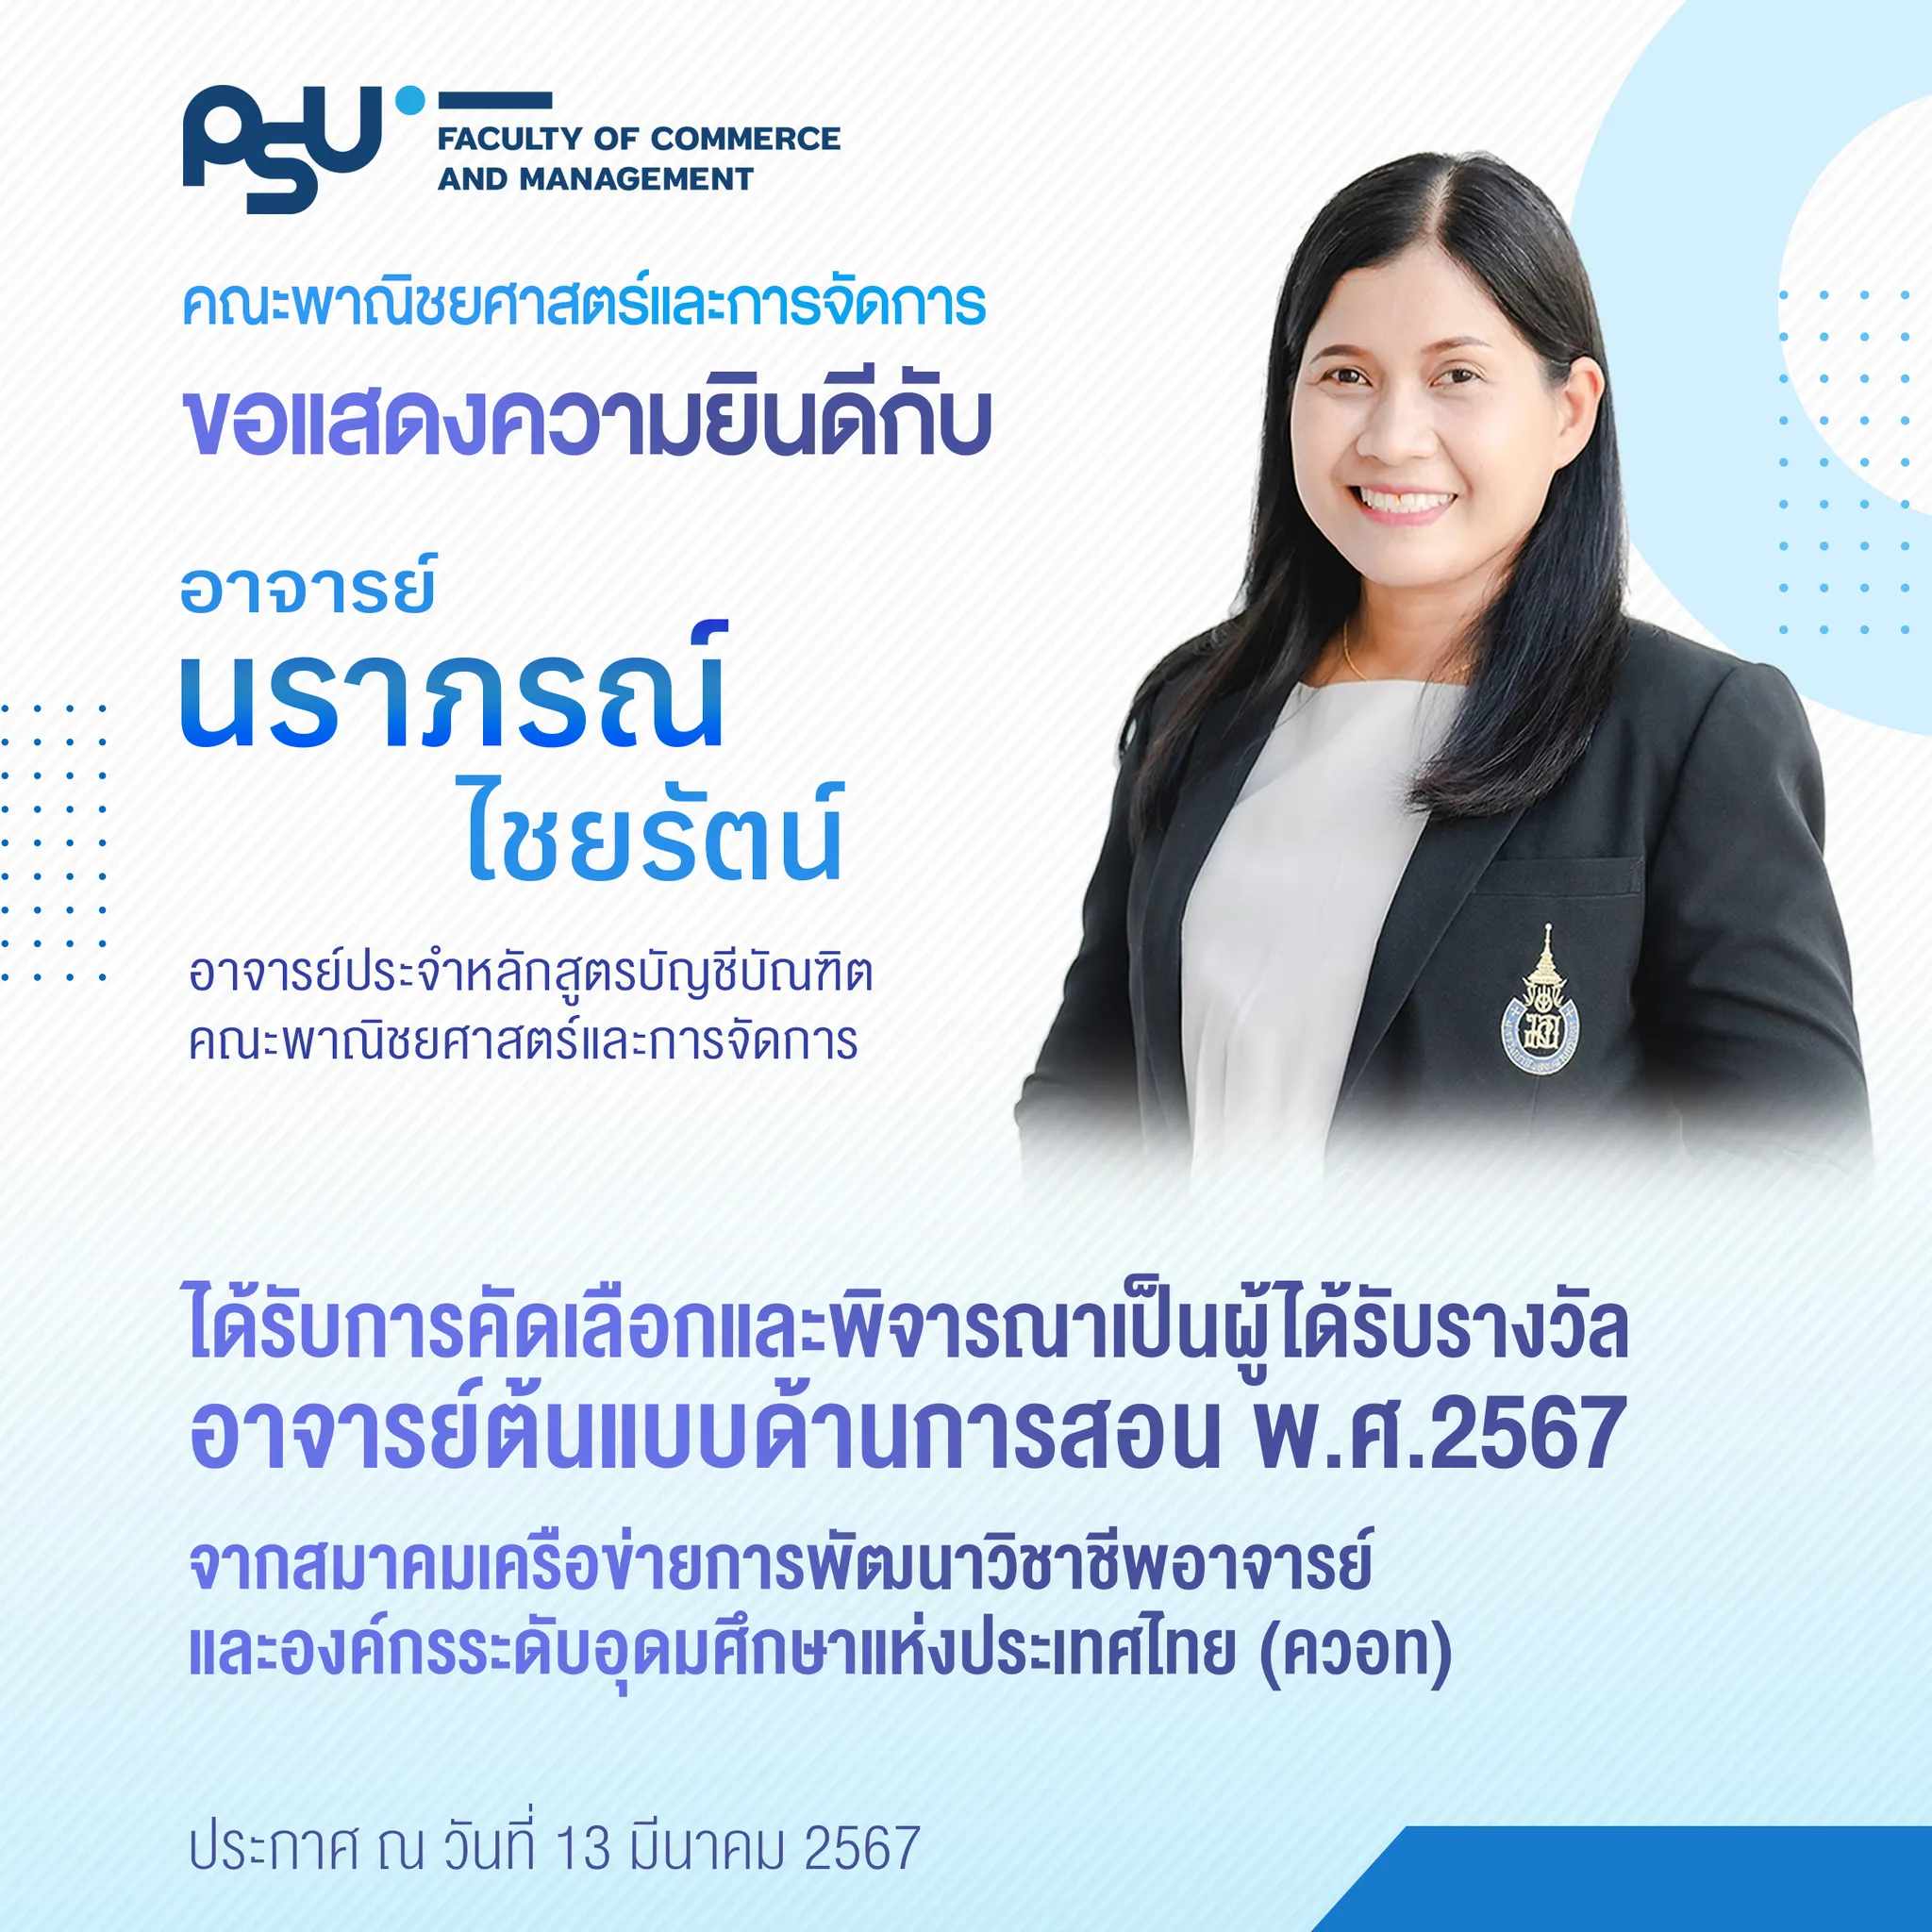 You are currently viewing อาจารย์ประจำหลักสูตรบัญชีบัณฑิตได้รับรางวัลอาจารย์ต้นแบบด้านการสอน พ.ศ.2567 จากสมาคมเครือข่ายการพัฒนาวิชาชีพอาจารย์และองค์กรระดับอุดมศึกษาแห่งประเทศไทย (ควอท)